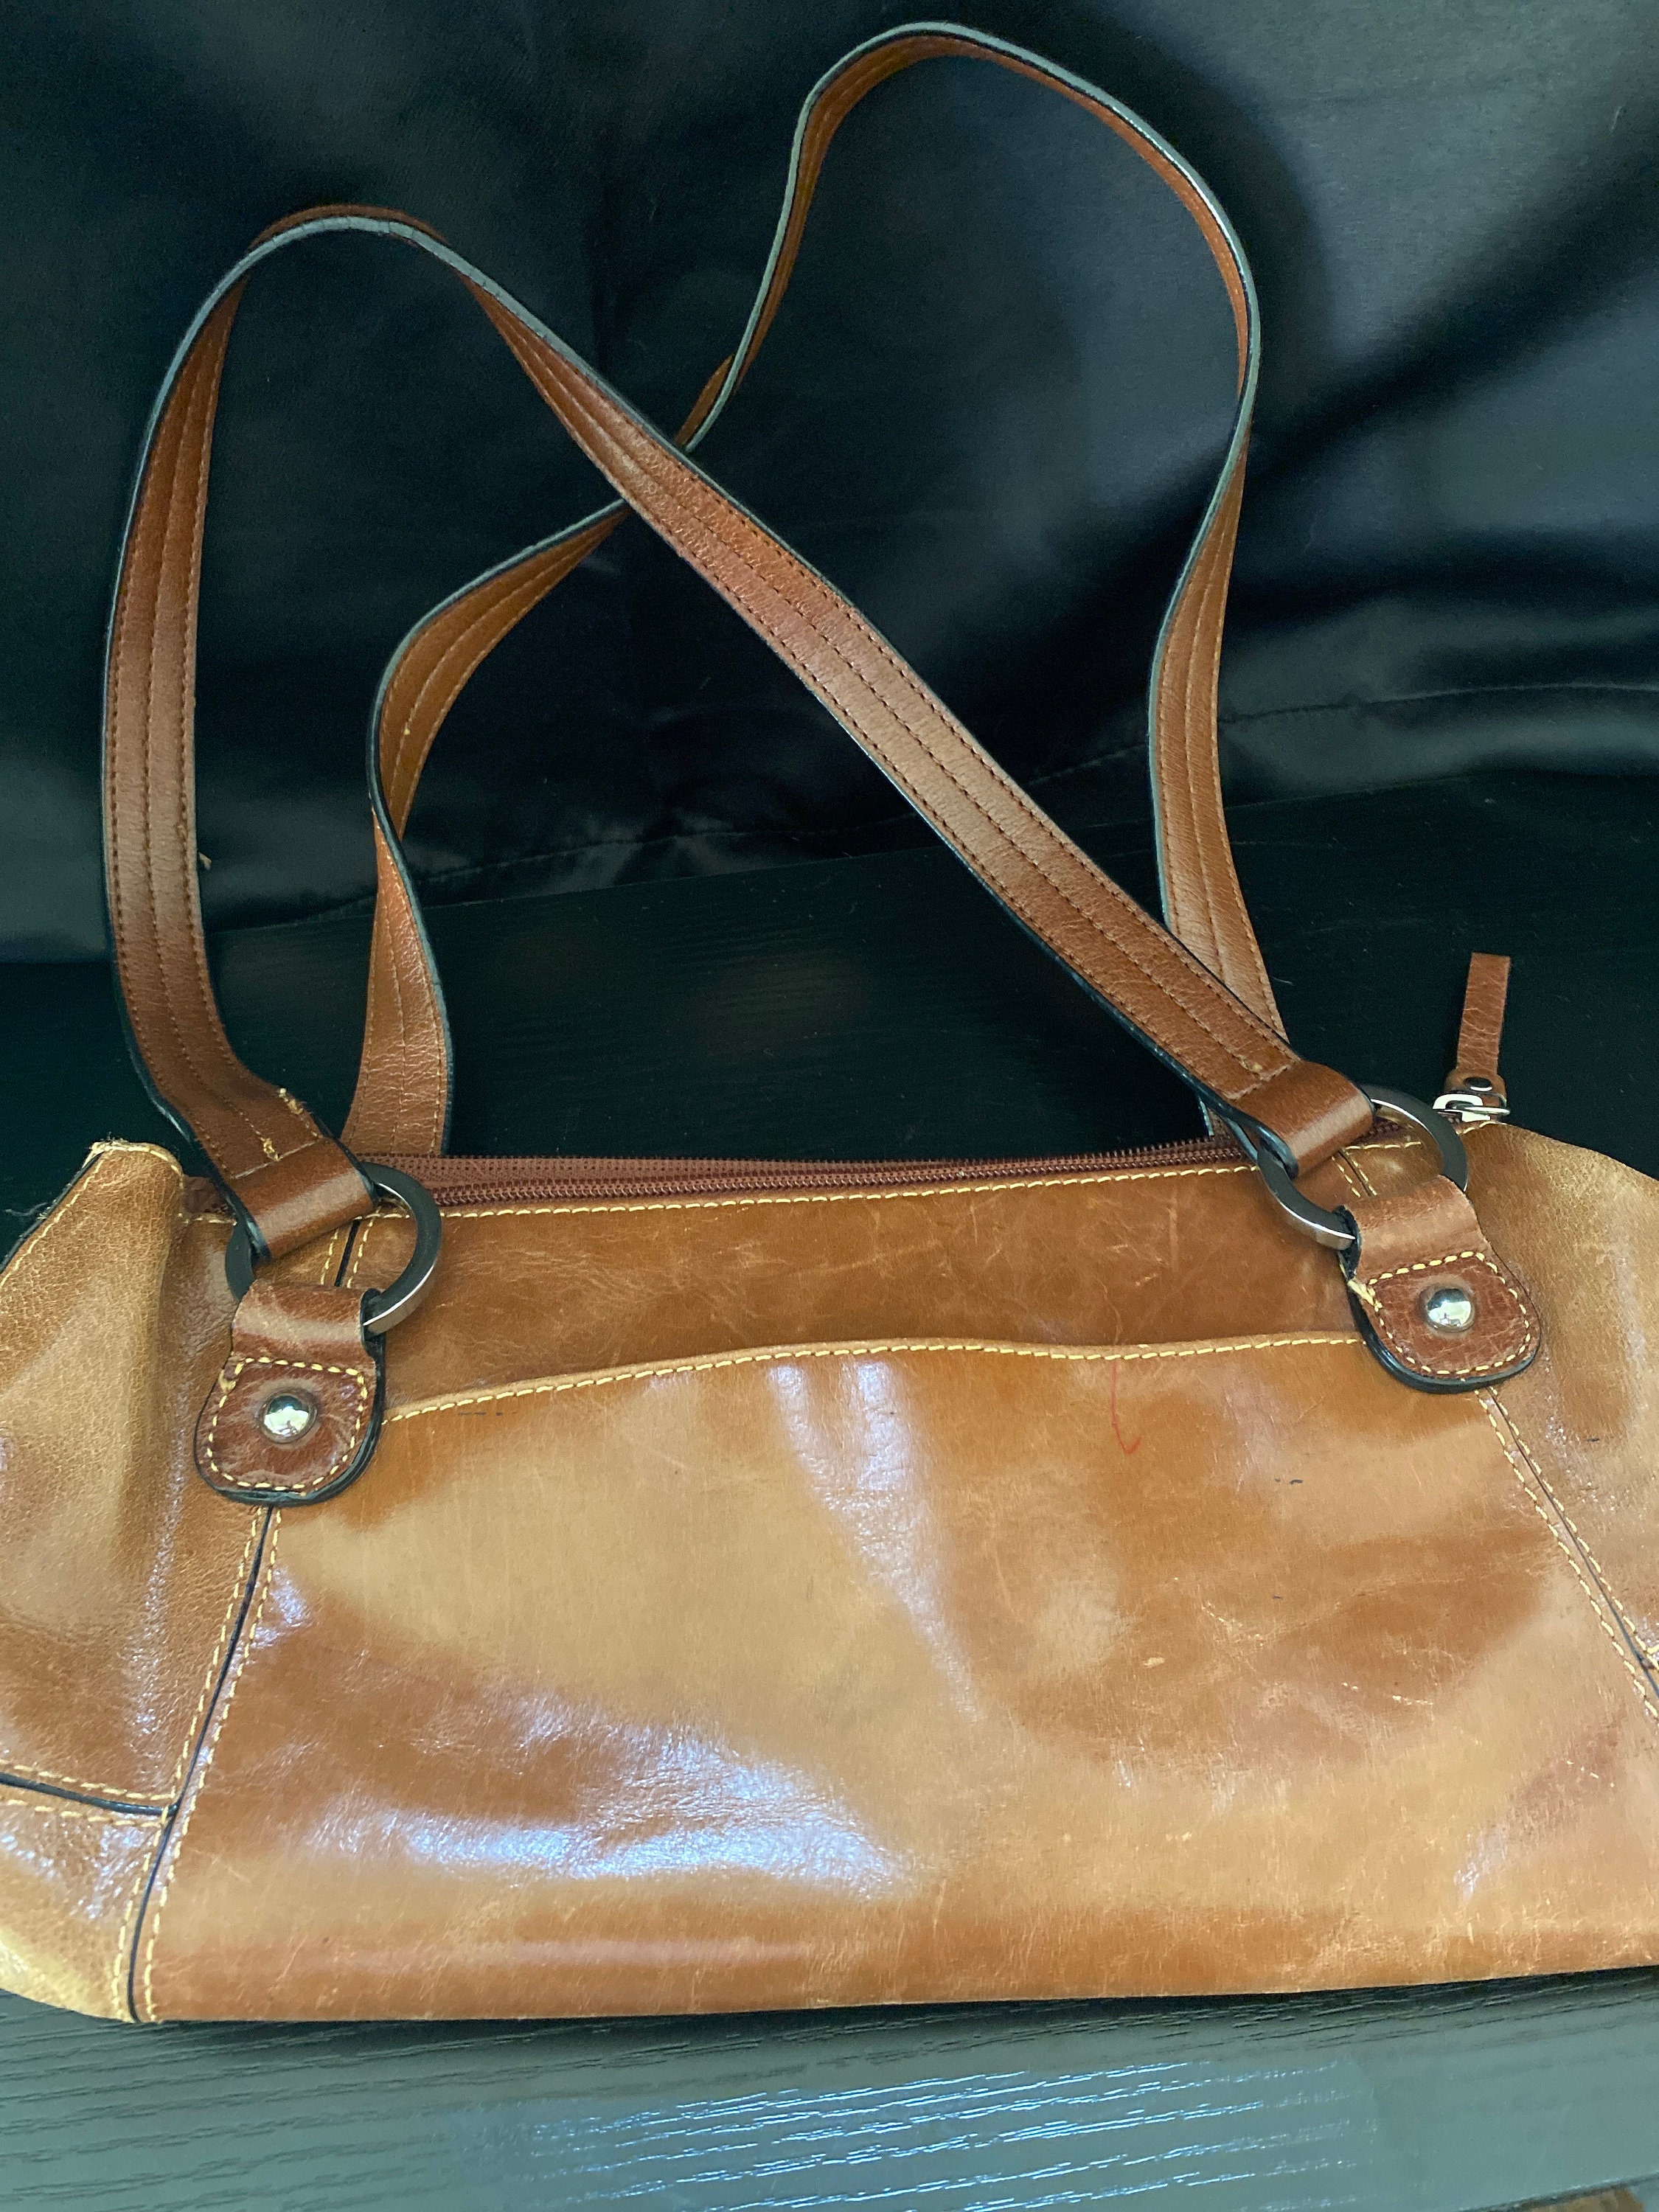 GIANI BERNINI Women's Brown Leather Strapless Trifold Wallet 